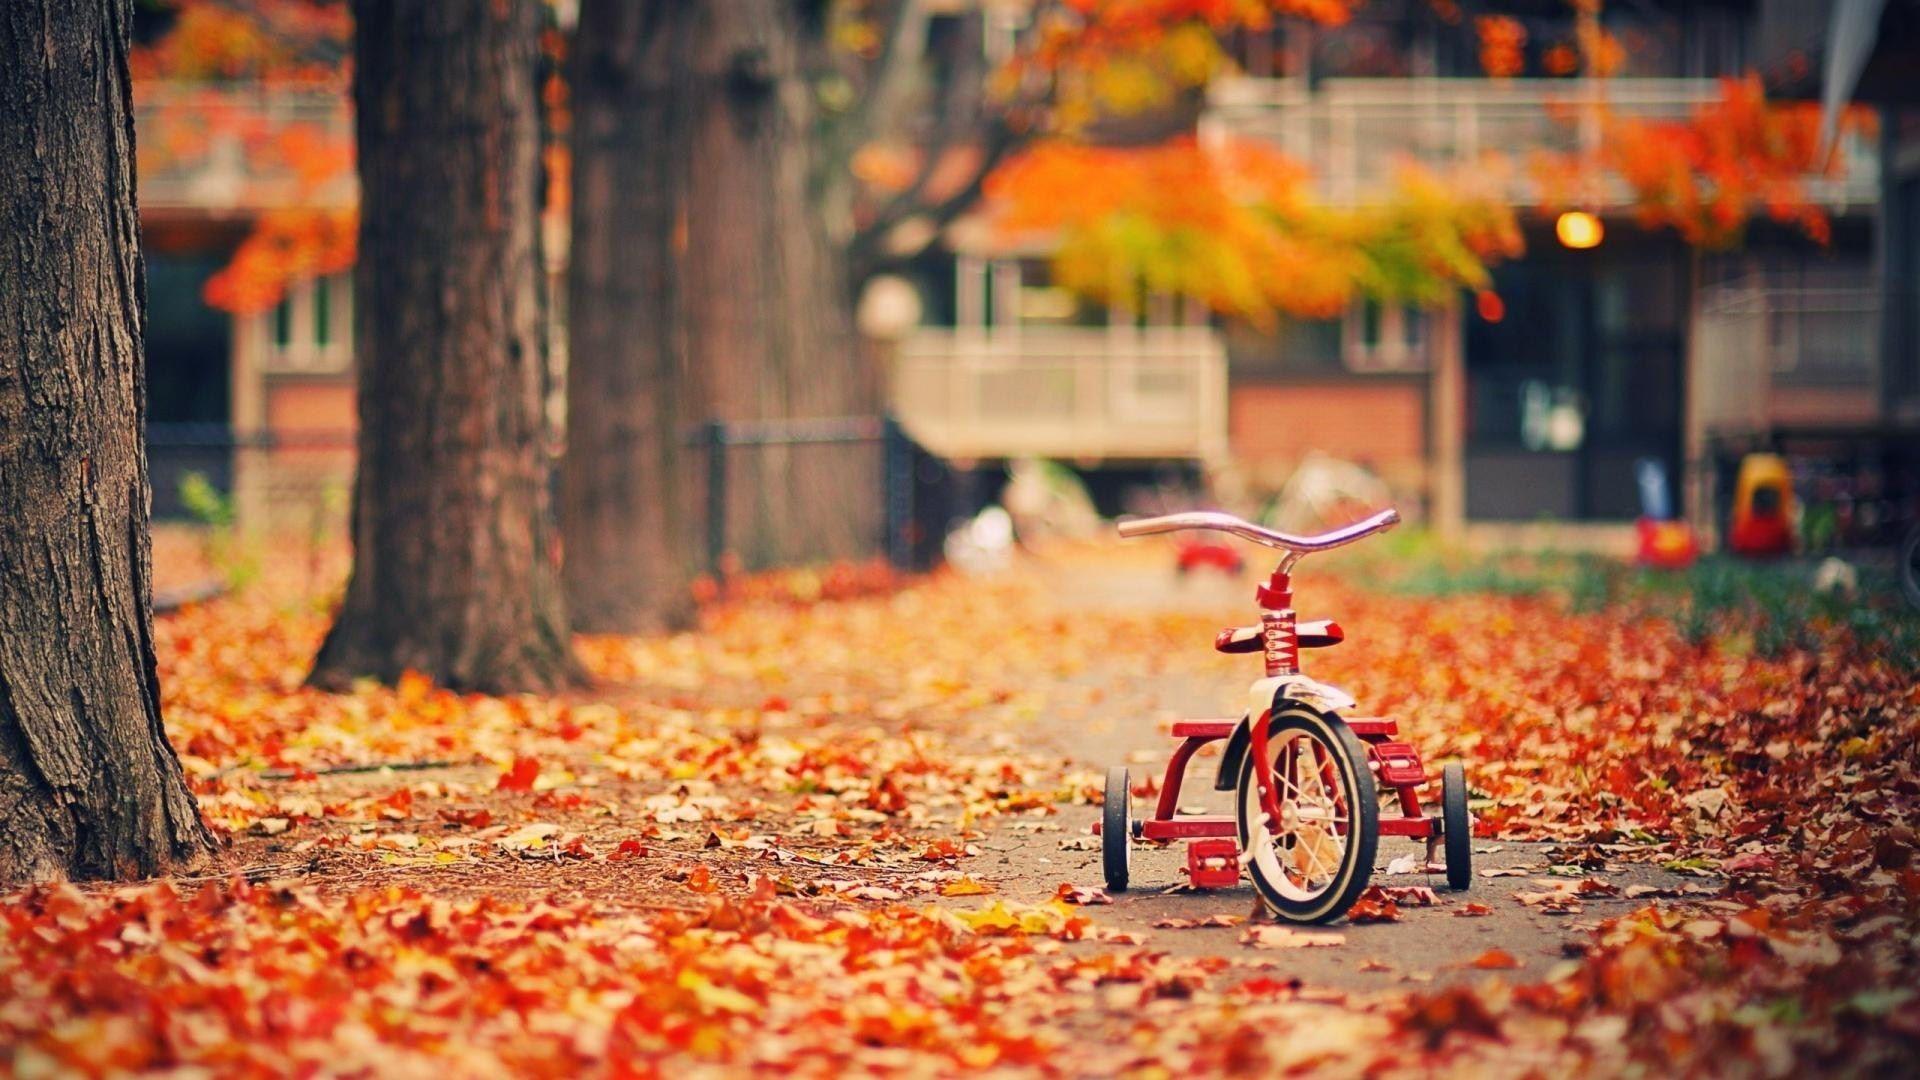 Autumn Wallpaper 2017 - Autumn Tricycle - HD Wallpaper 